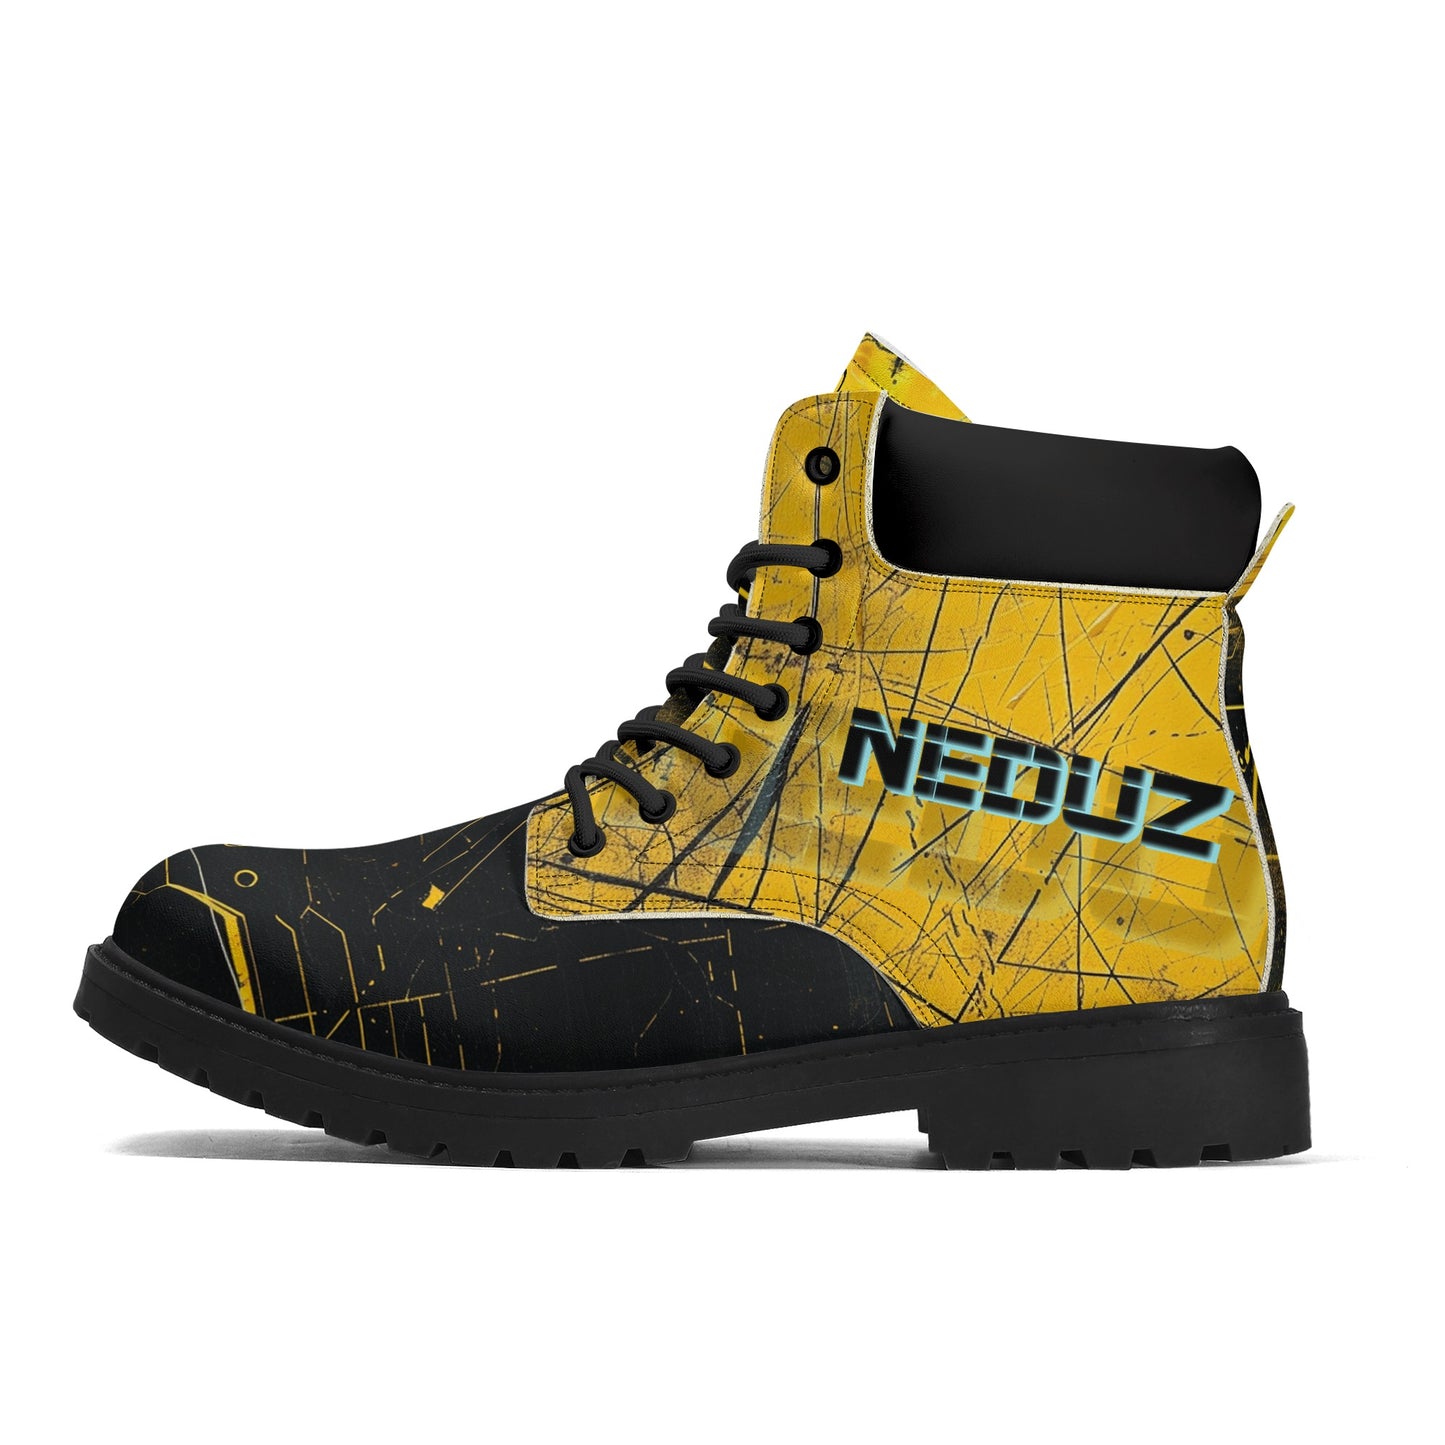 Neduz Cyberpunk Grunge All-Season Unisex Boots - Waterproof Eco-Friendly PU Leather with Black Outsole